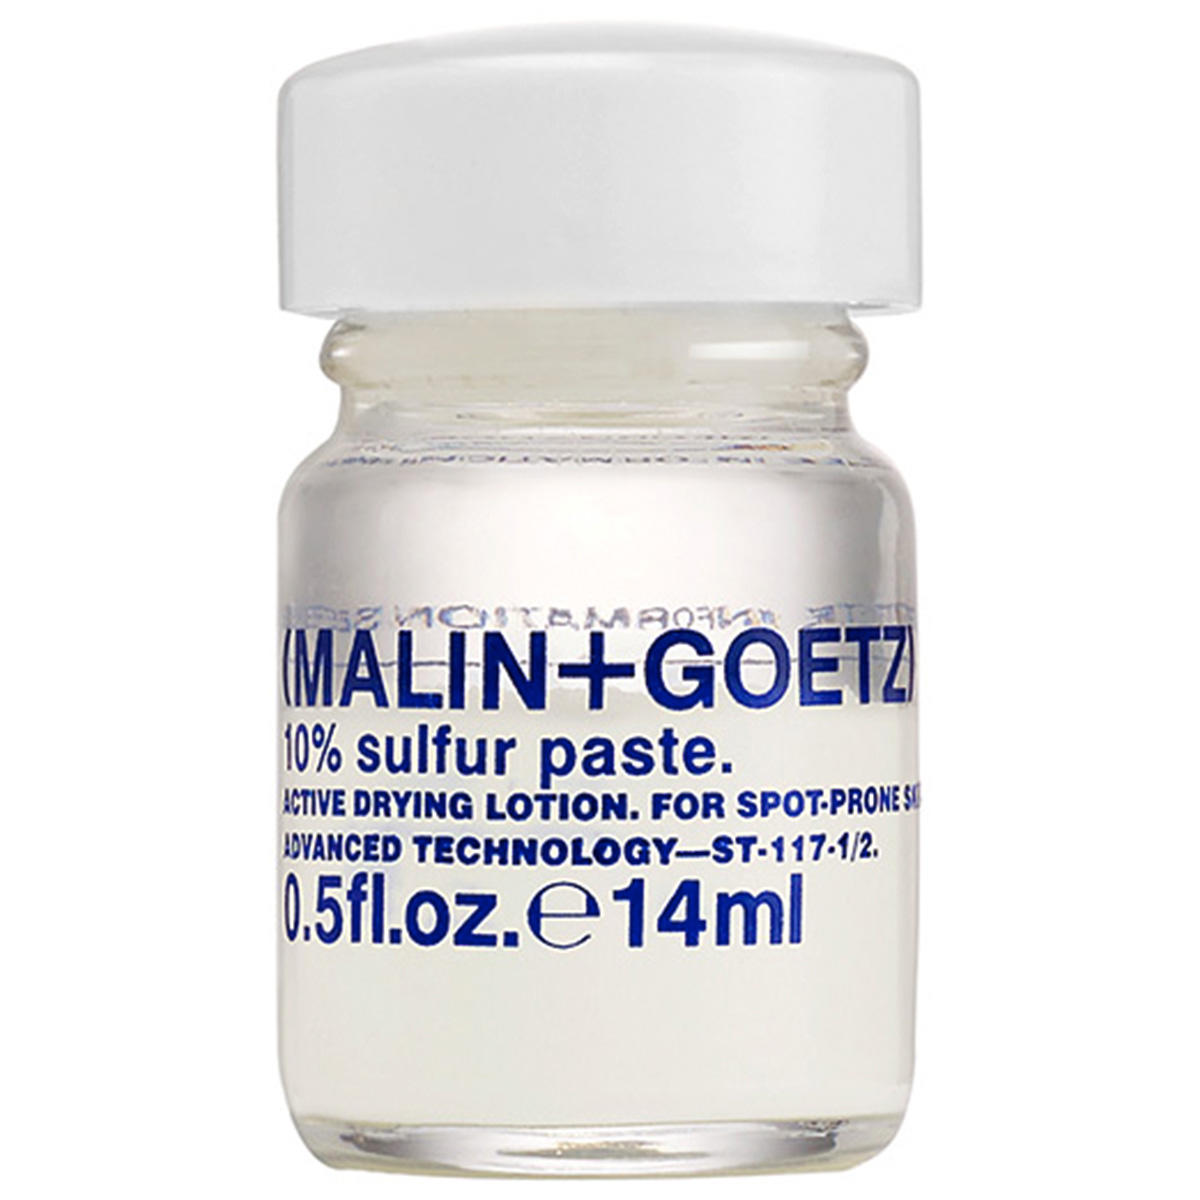 (MALIN+GOETZ) 10% Sulfur Paste 14 ml - 1